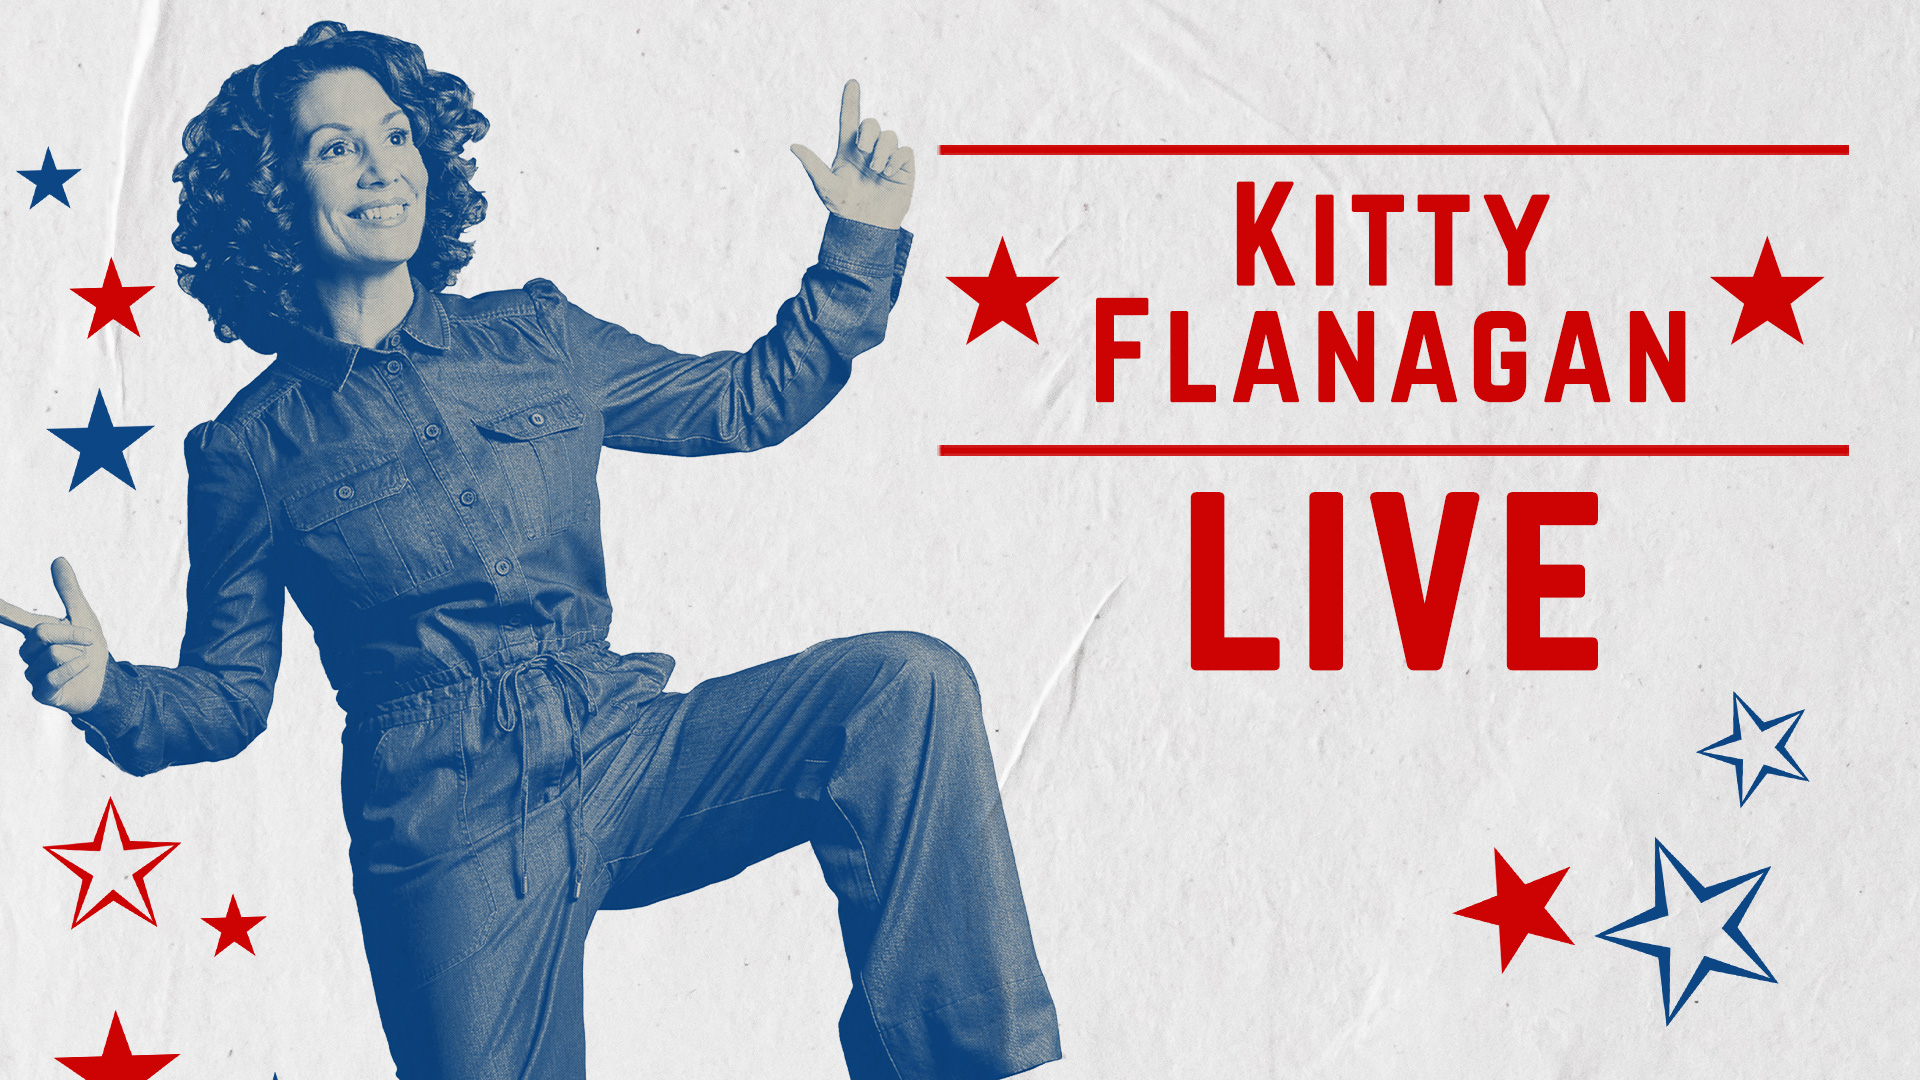 Kitty Flanagan - Live Theatre and Community Hub